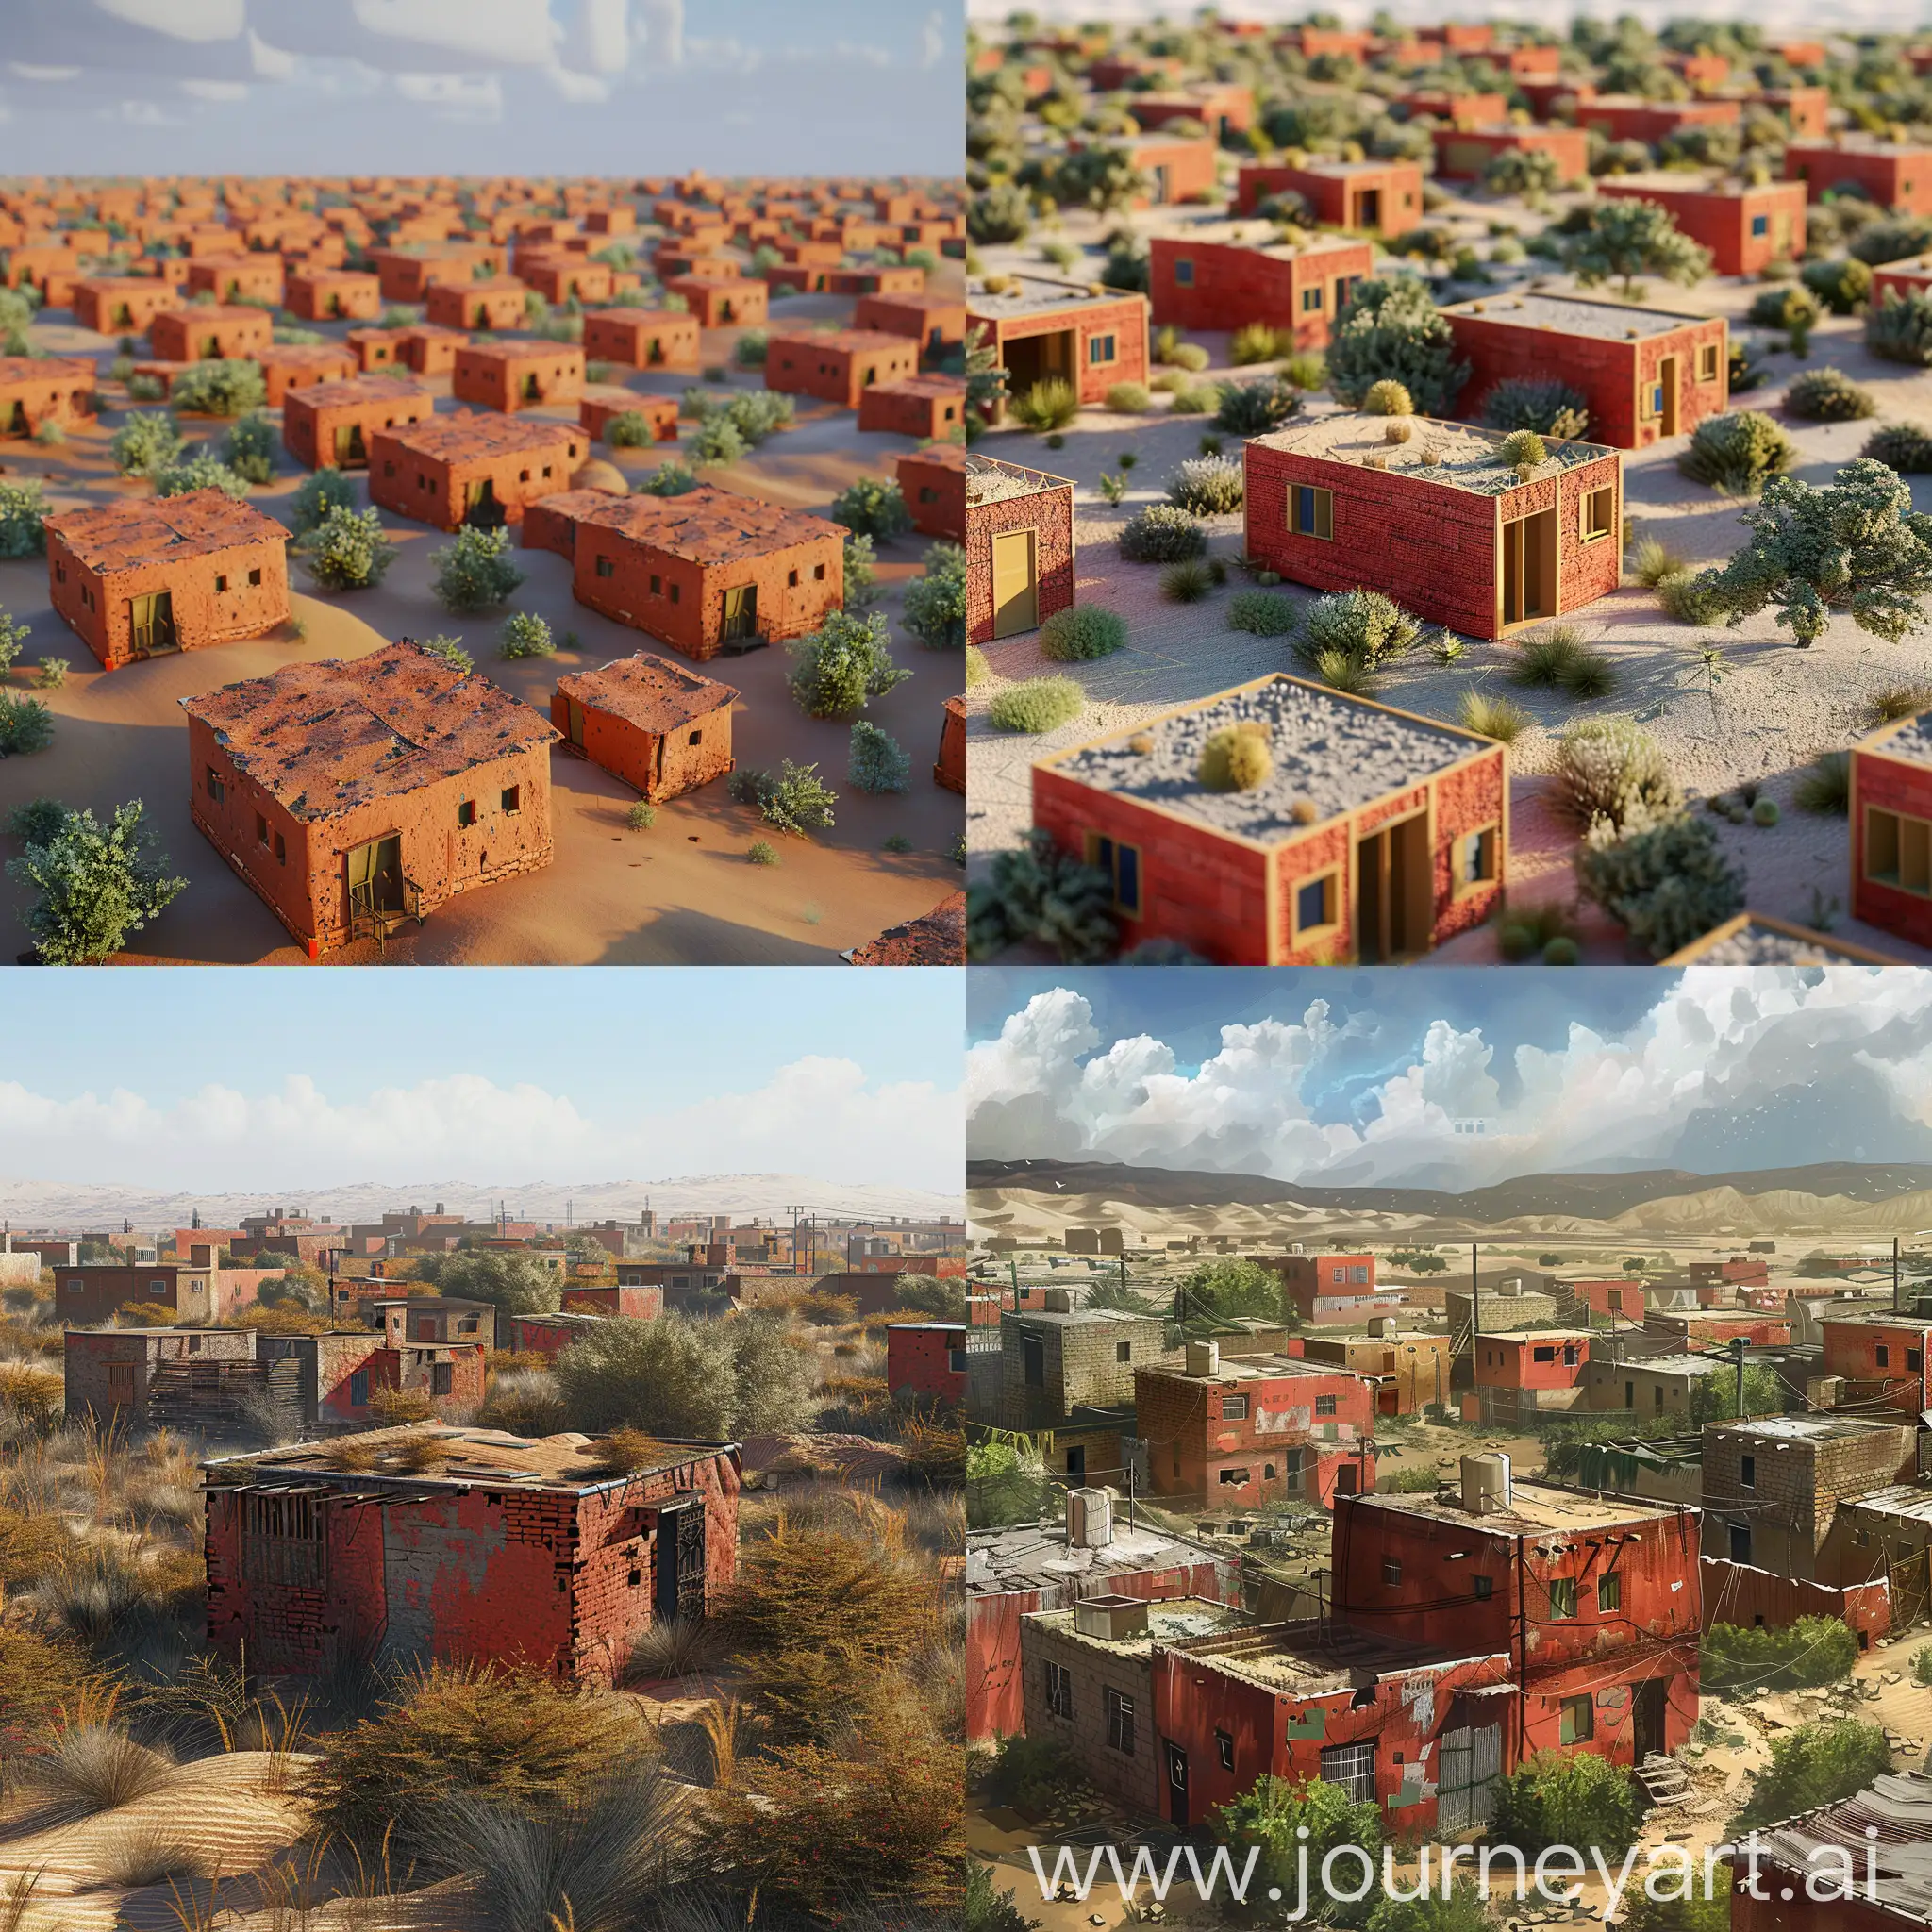 Red brick slum in a desert area where bushes are planted in 2D